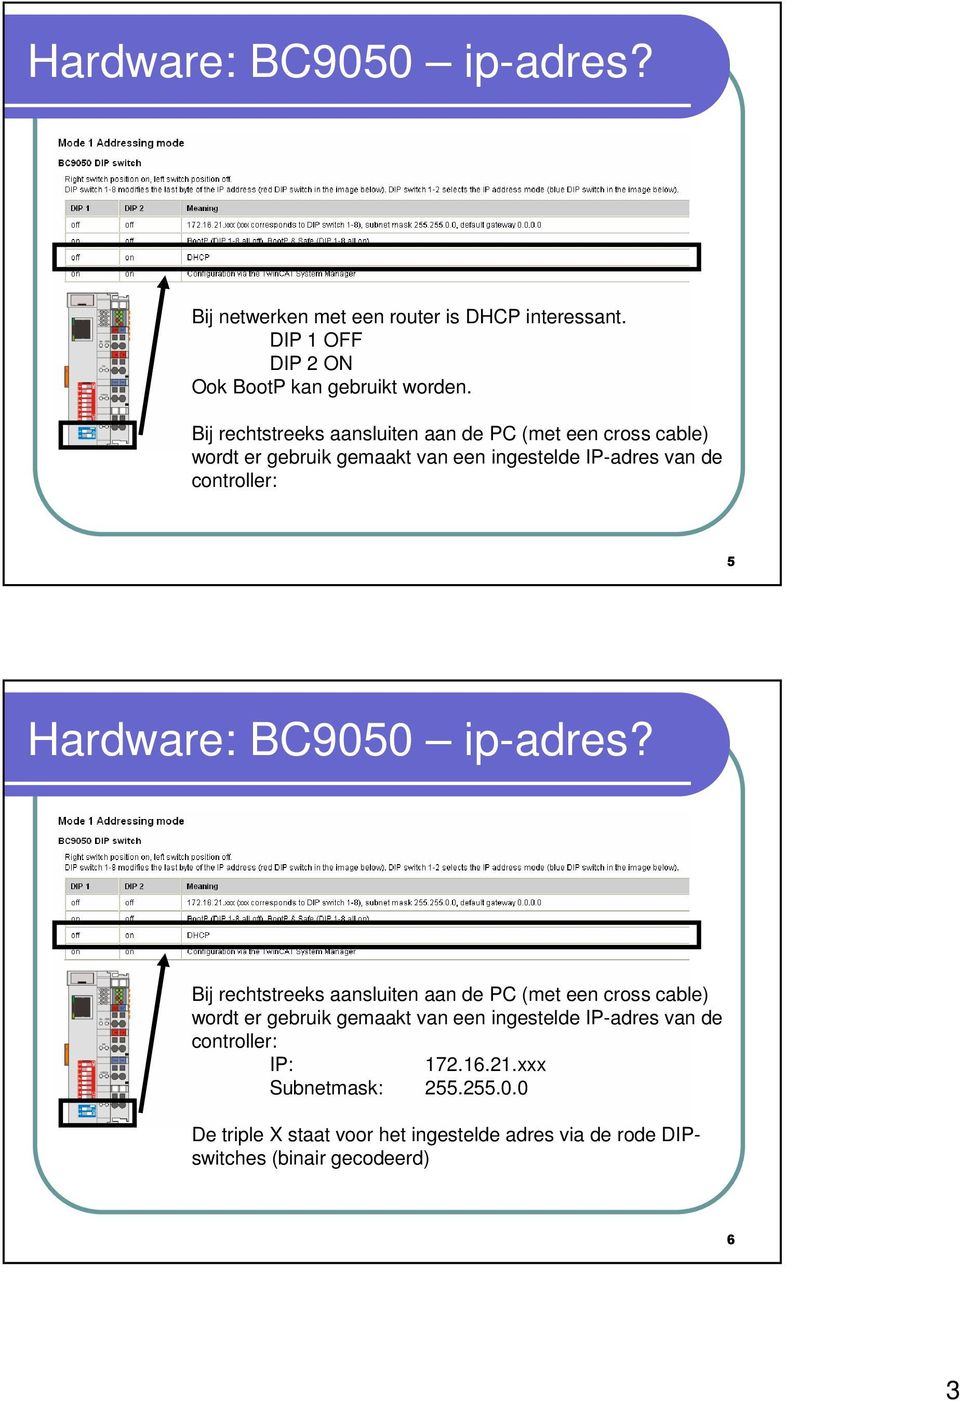 Hardware: BC9050 ip-adres?